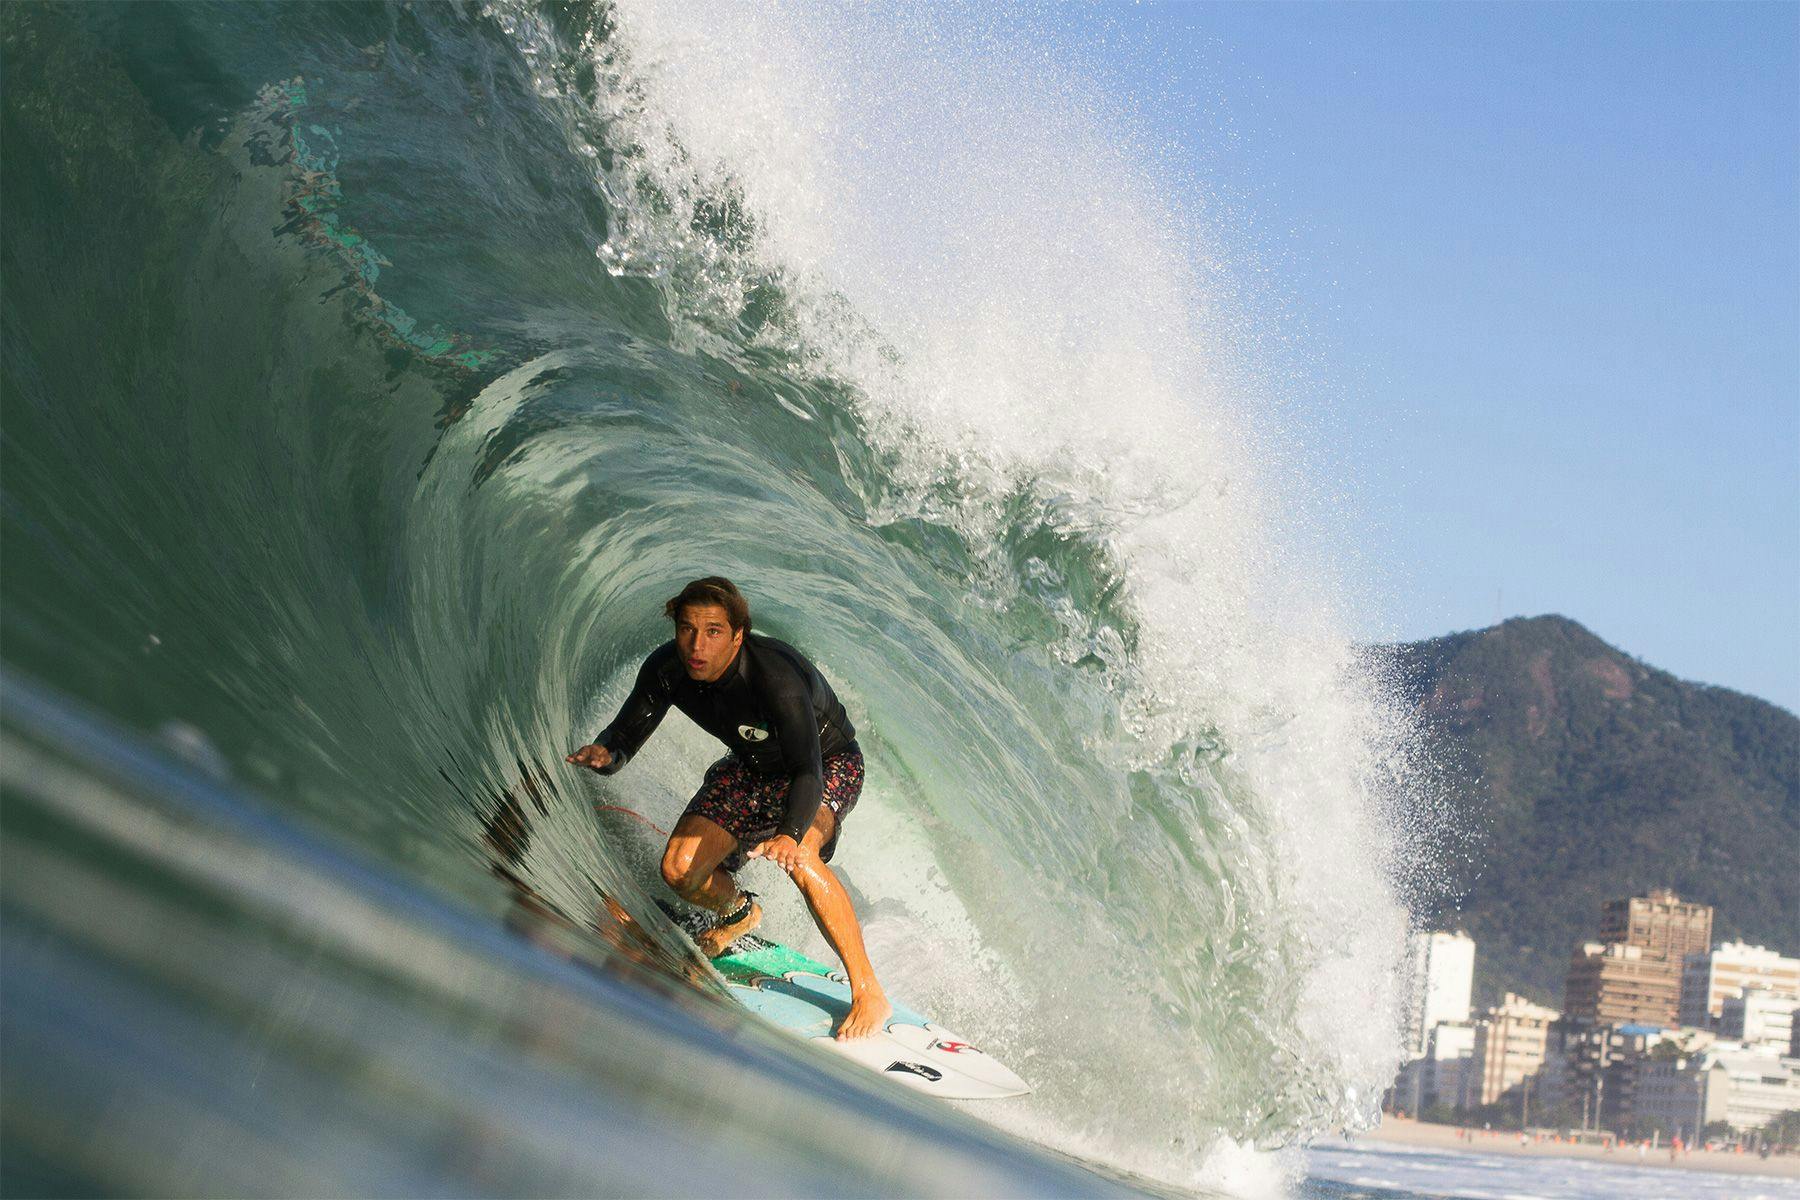 surfer in the barrel at ipanema, by ana catarina